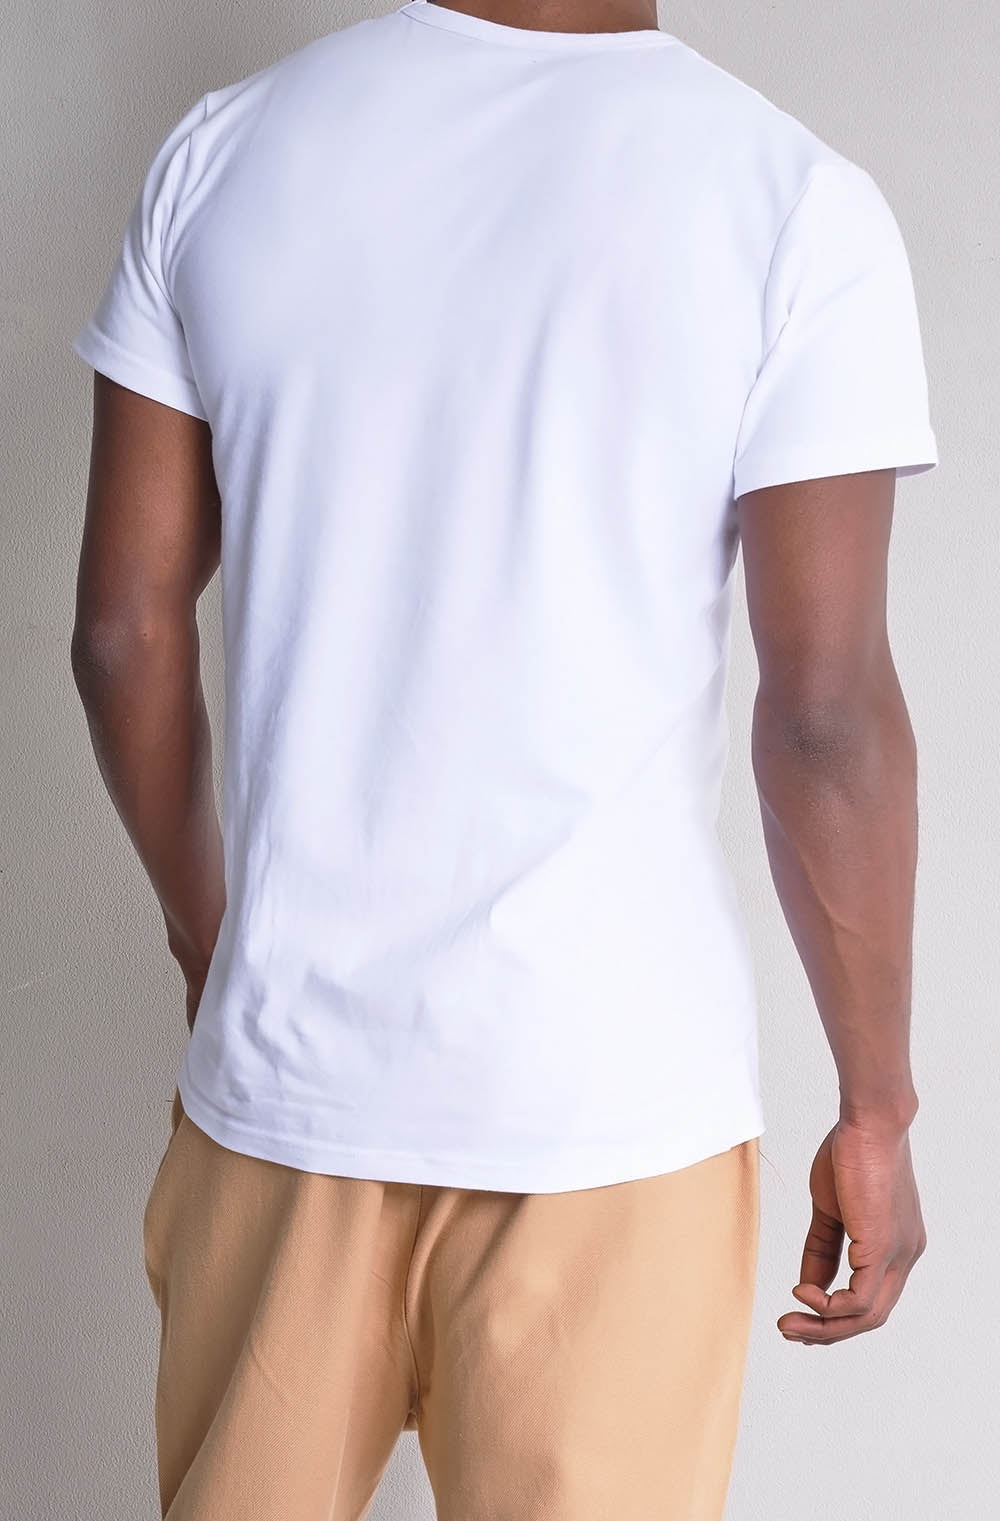  QL BAZ Longline T-Shirt White Pack (Pack of 2) - QABA'IL,